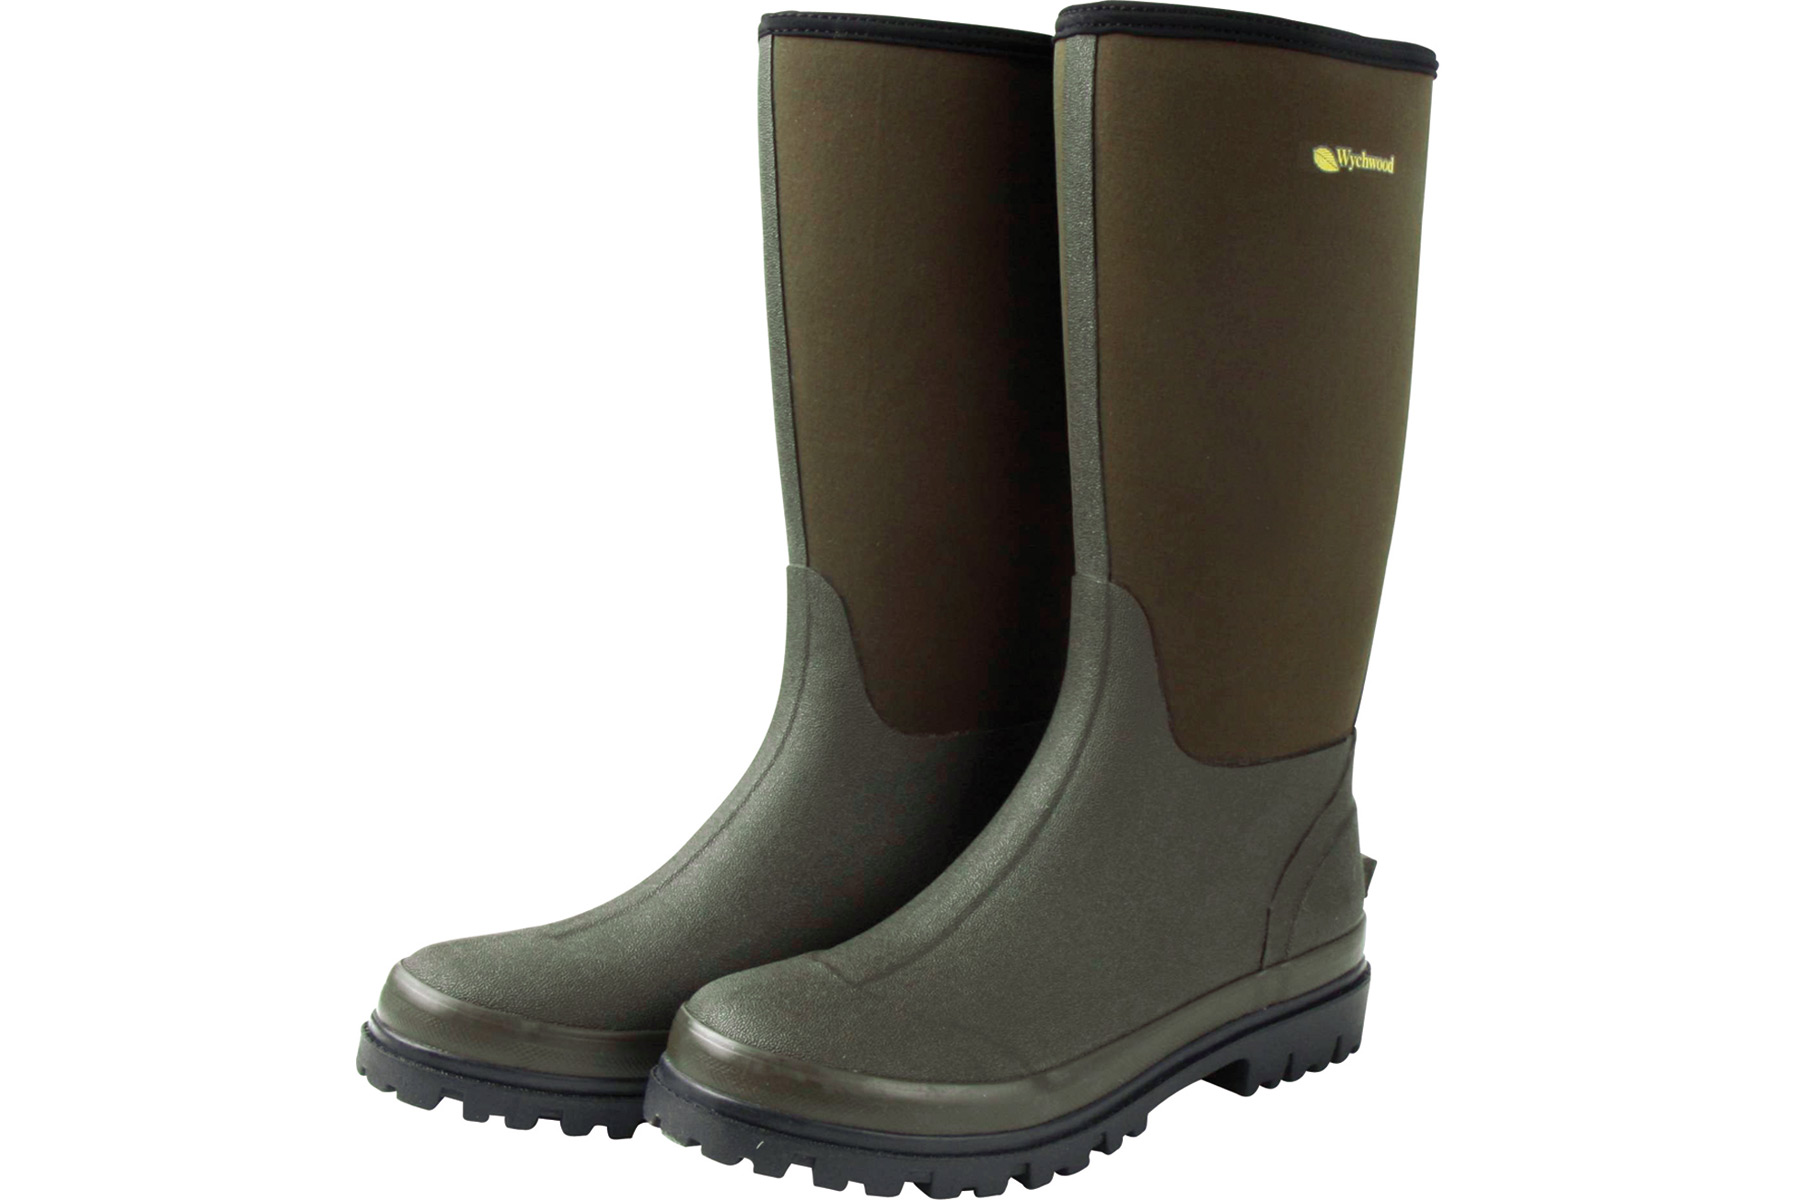 Wychwood Wychwood 3/4 Length Neo Boots 12